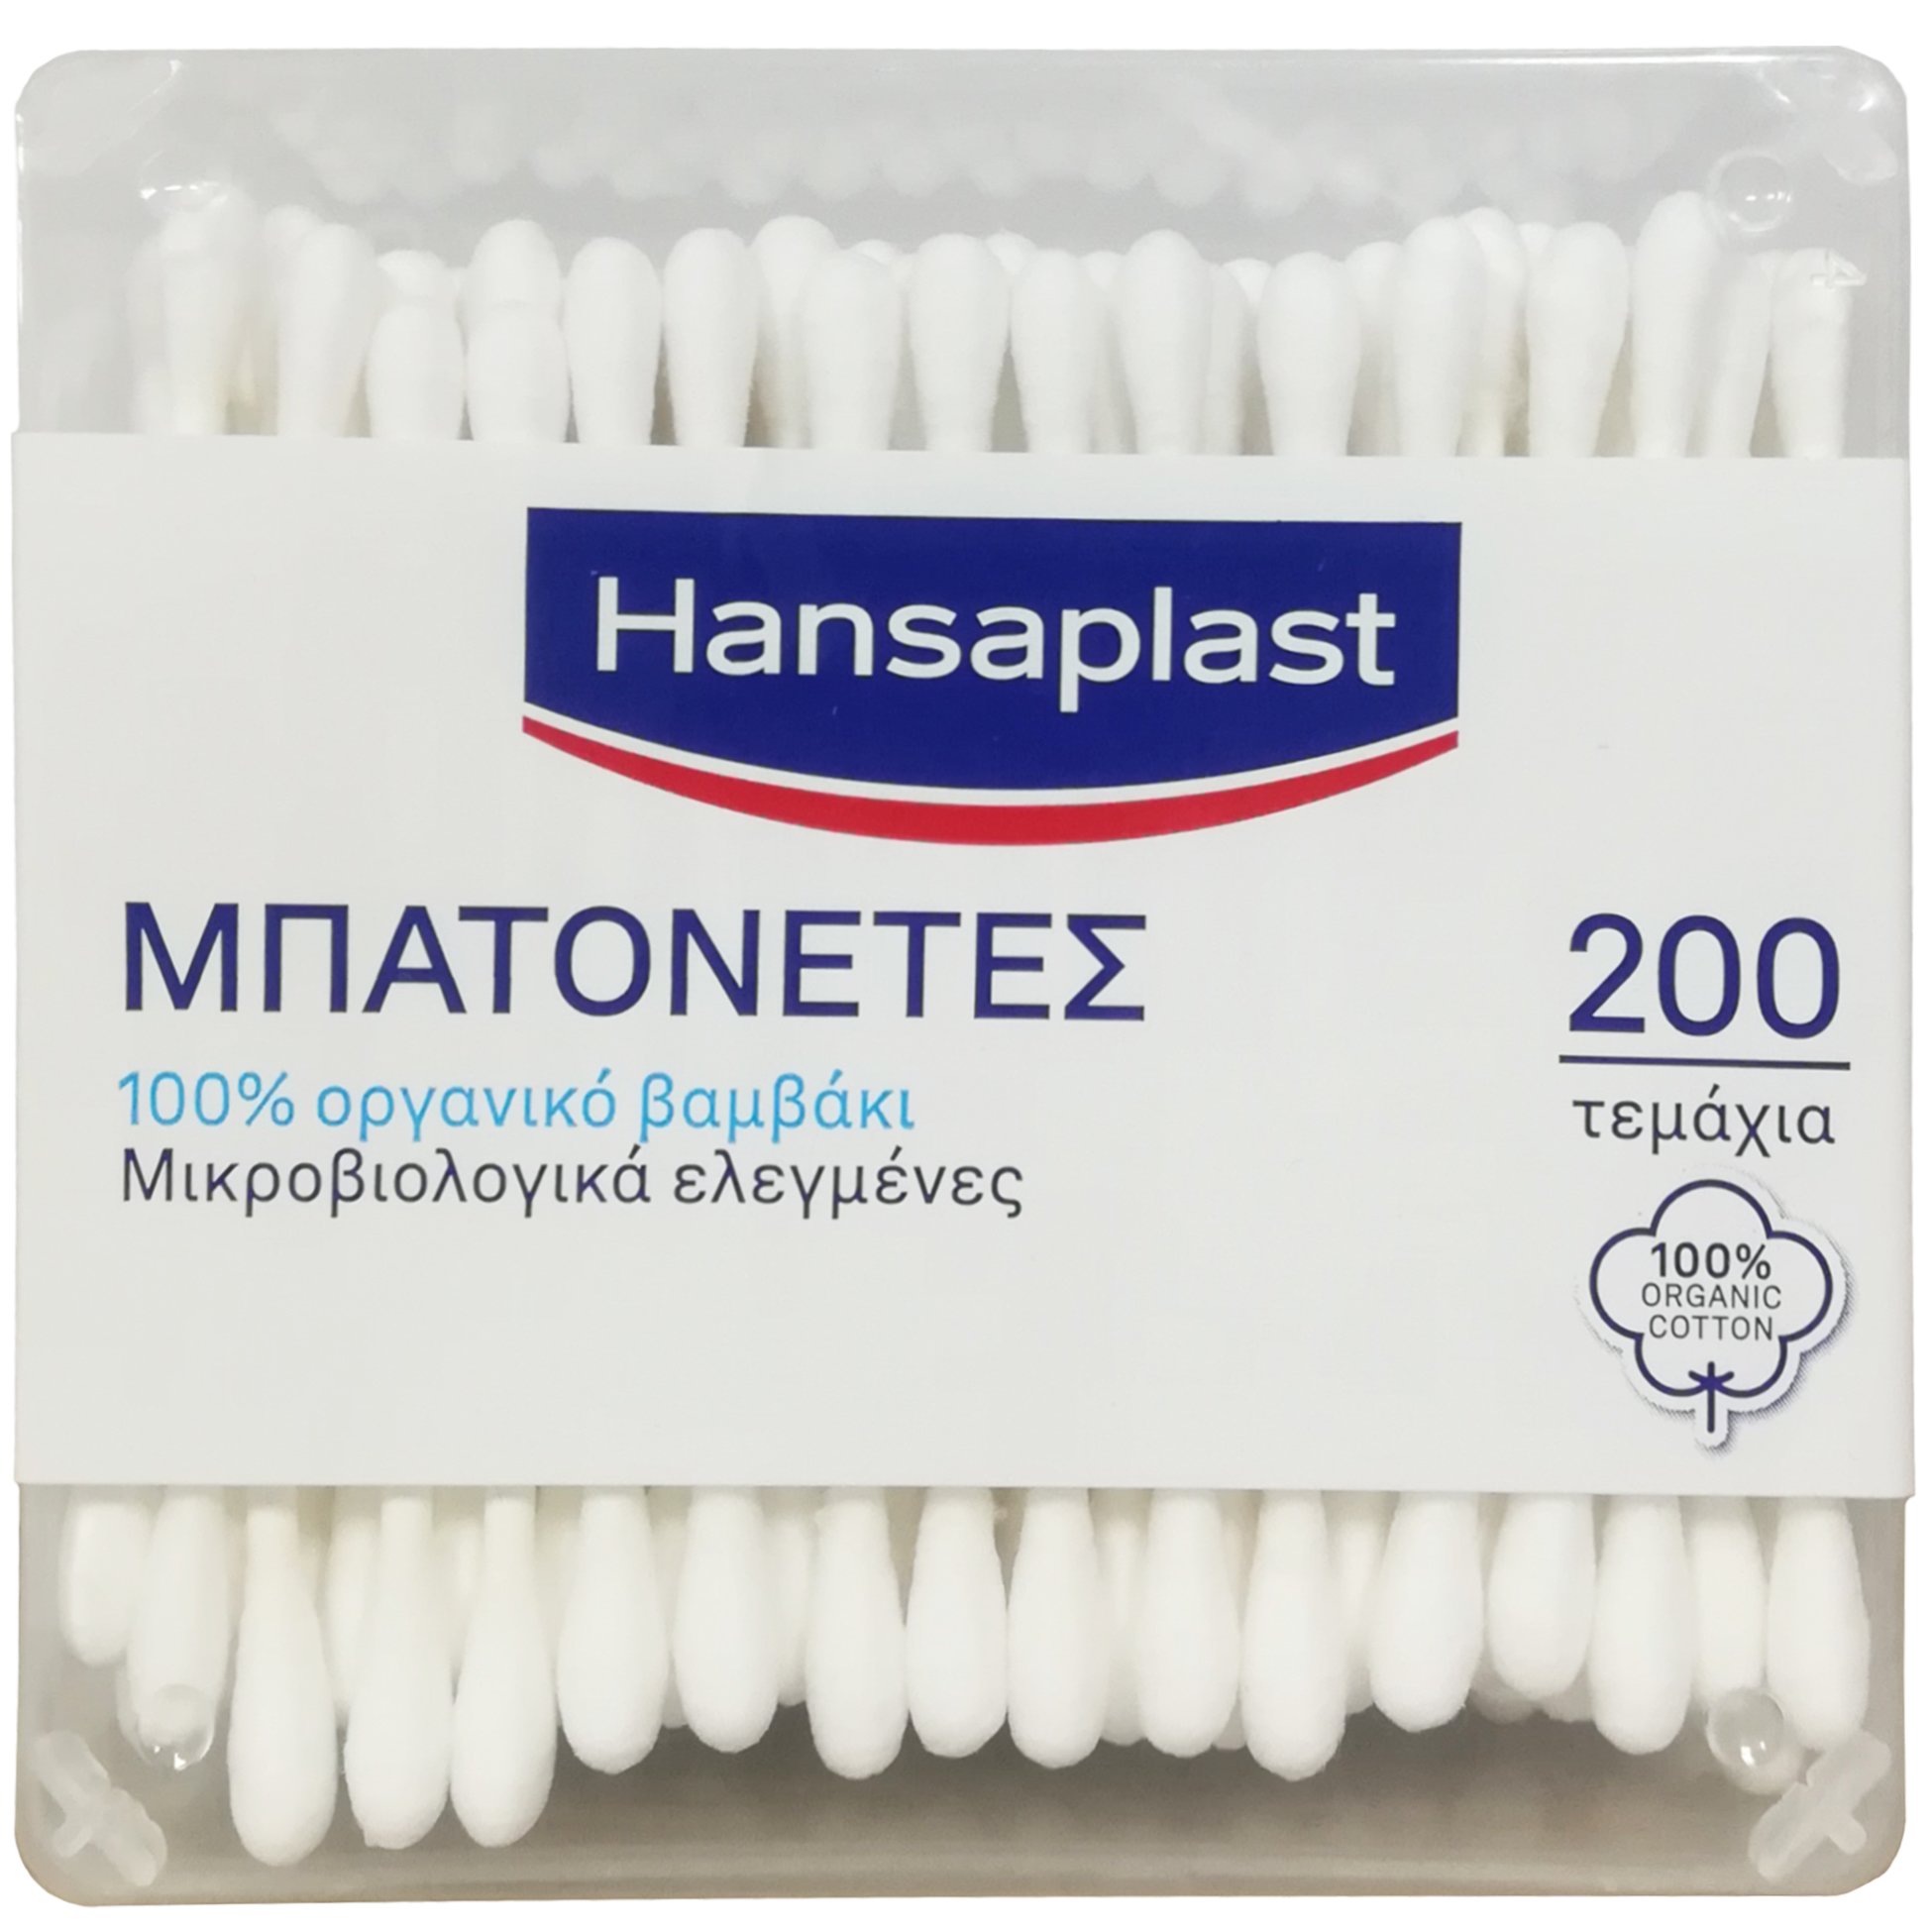 Hansaplast Hansaplast Cotton Buds Μπατονέτες με 100% Αγνό Βαμβάκι για την Καθημερινή Φροντίδα & Περιποίηση Όλης της Οικογένειας 200 Τεμάχια